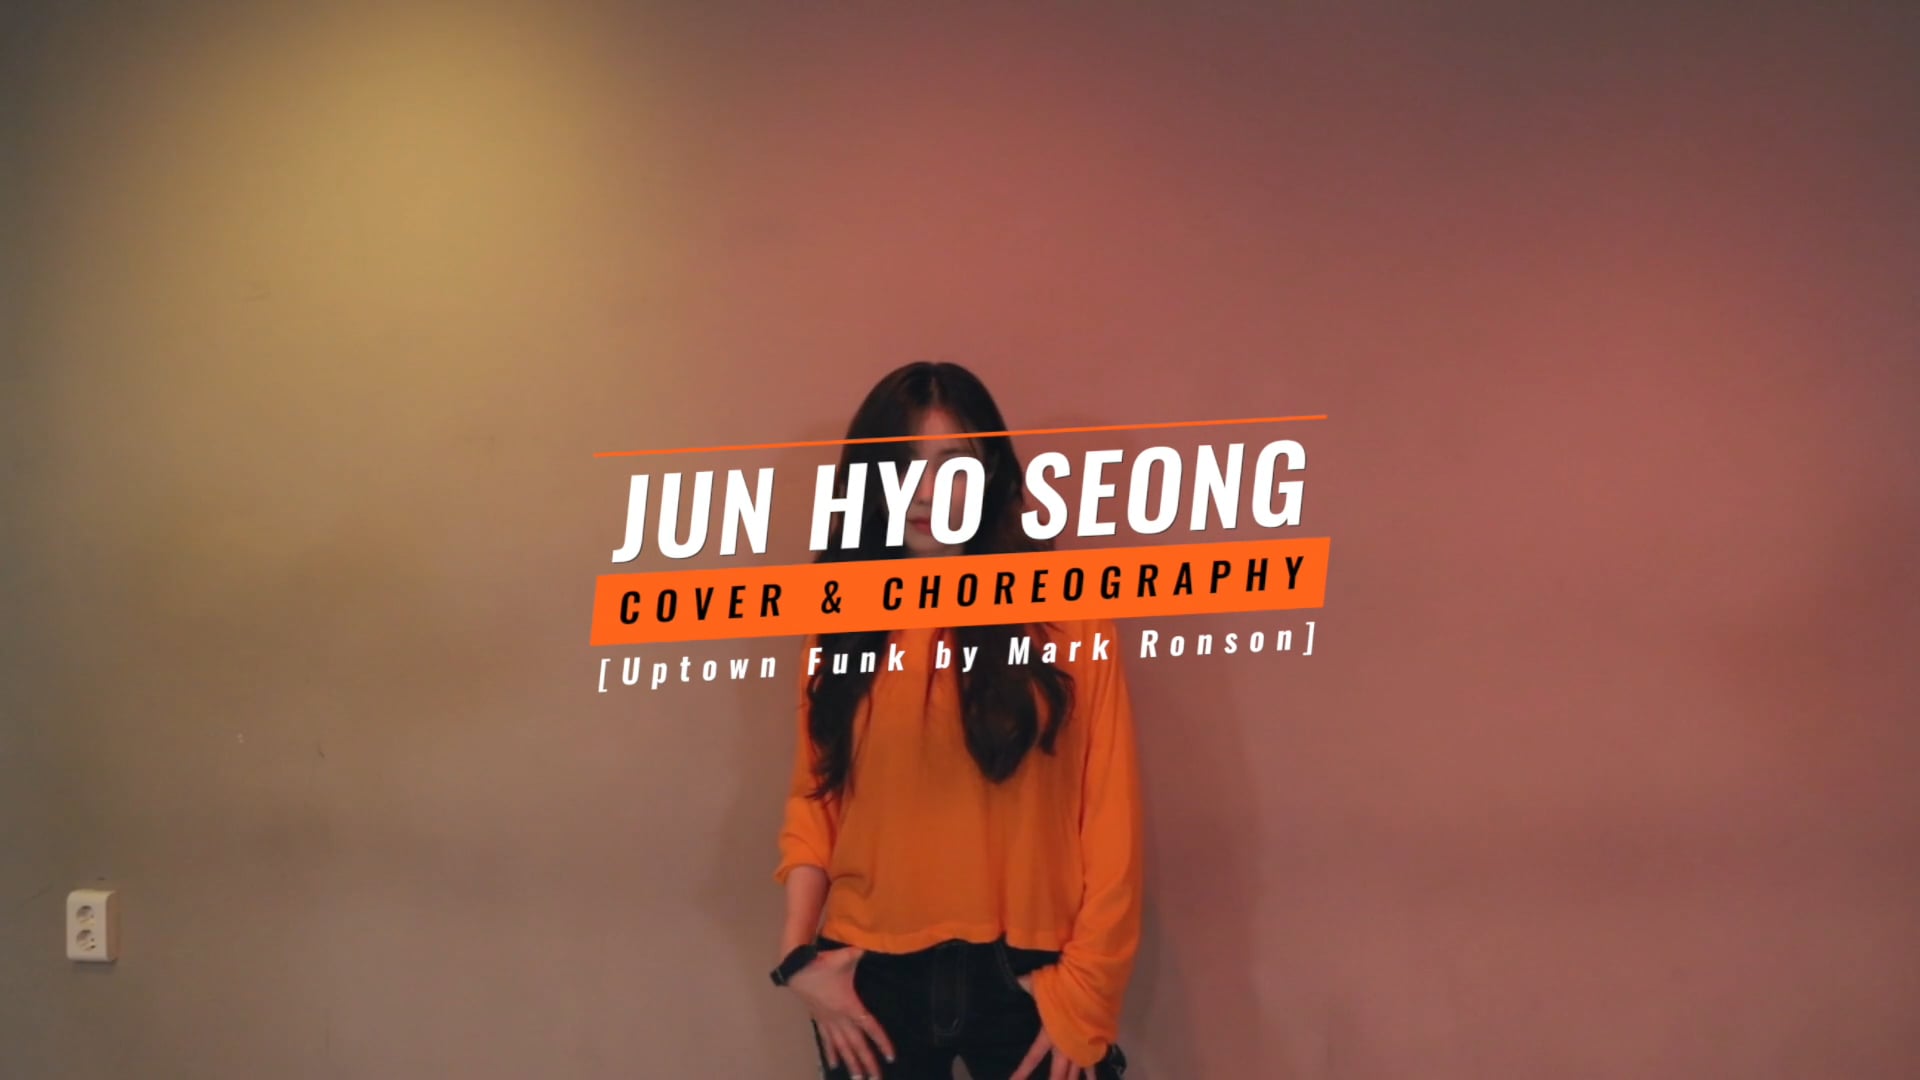 JUN HYO SEONG COVER & CHOREOGRAPHY - Uptown Funk by Mark Ronson [Trephic]